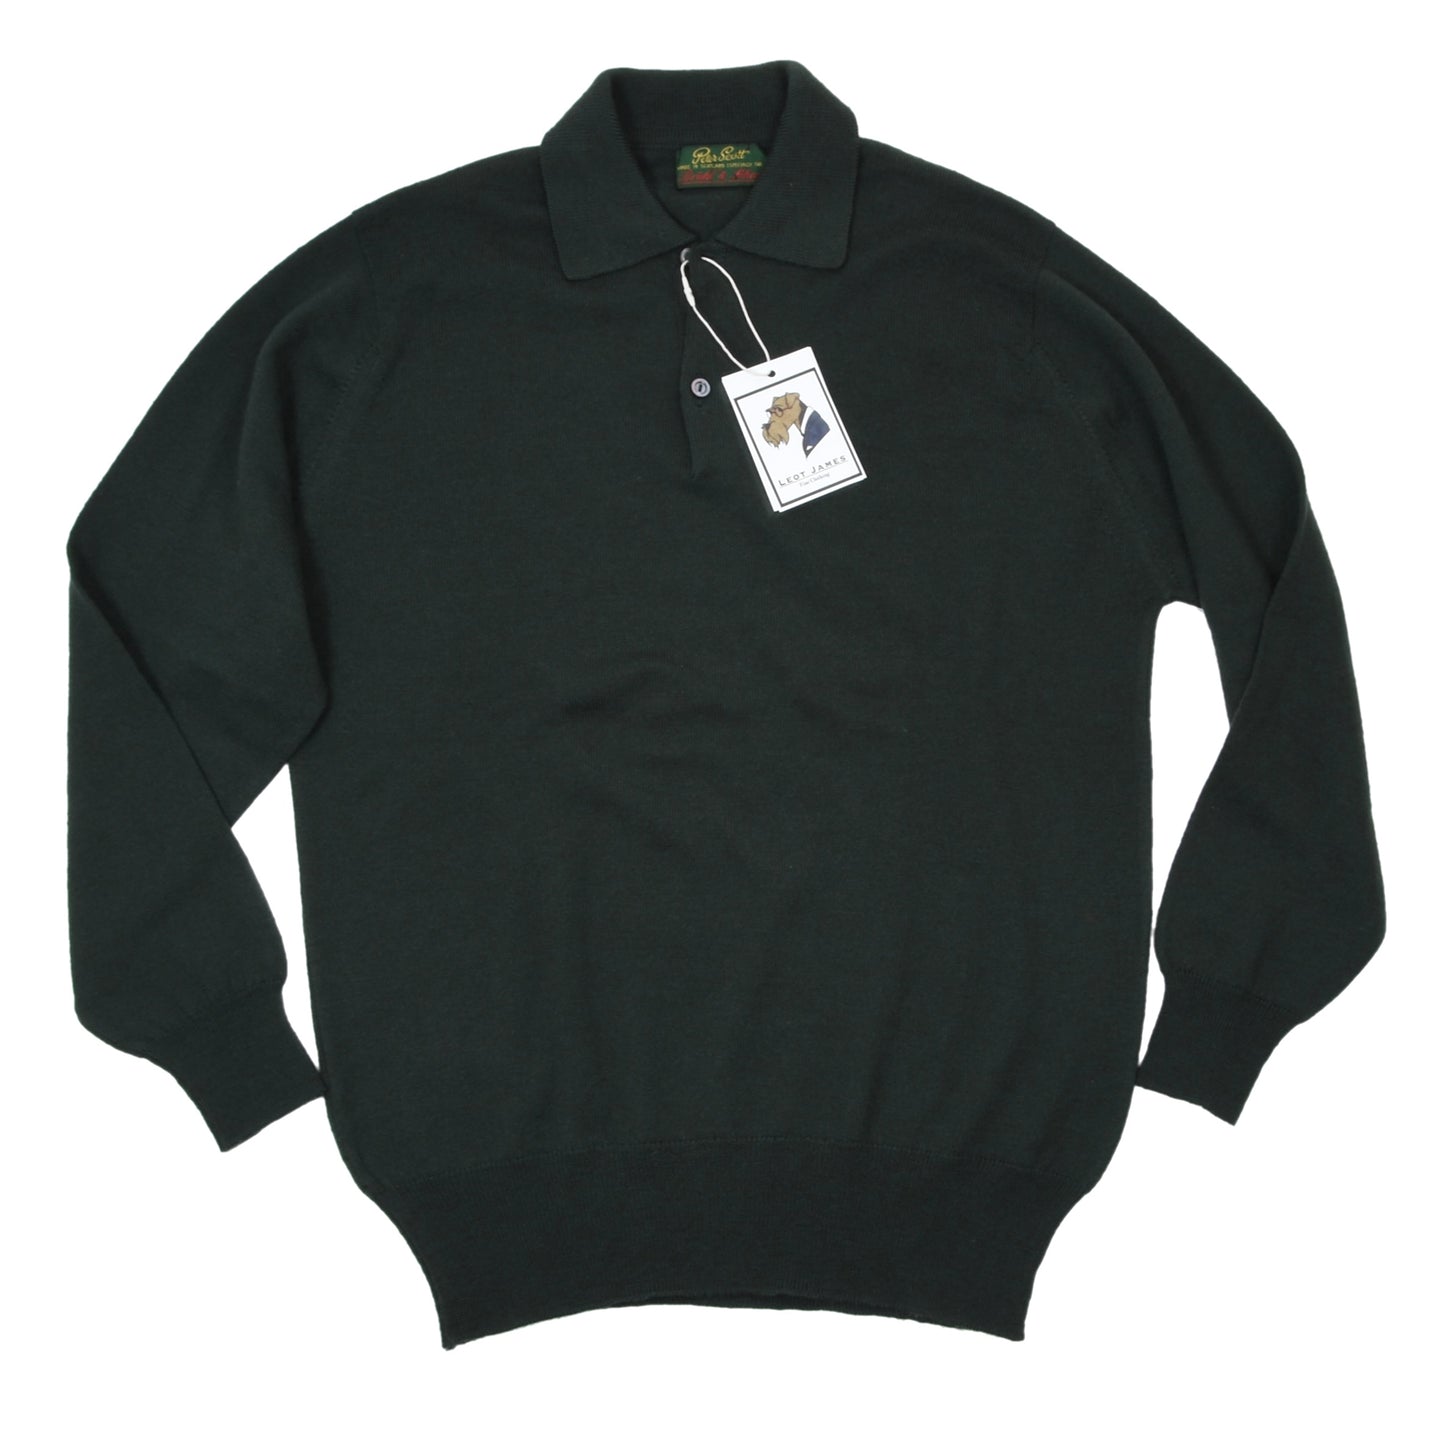 Peter Scott Wool Polo Sweater Size UK40 - Green